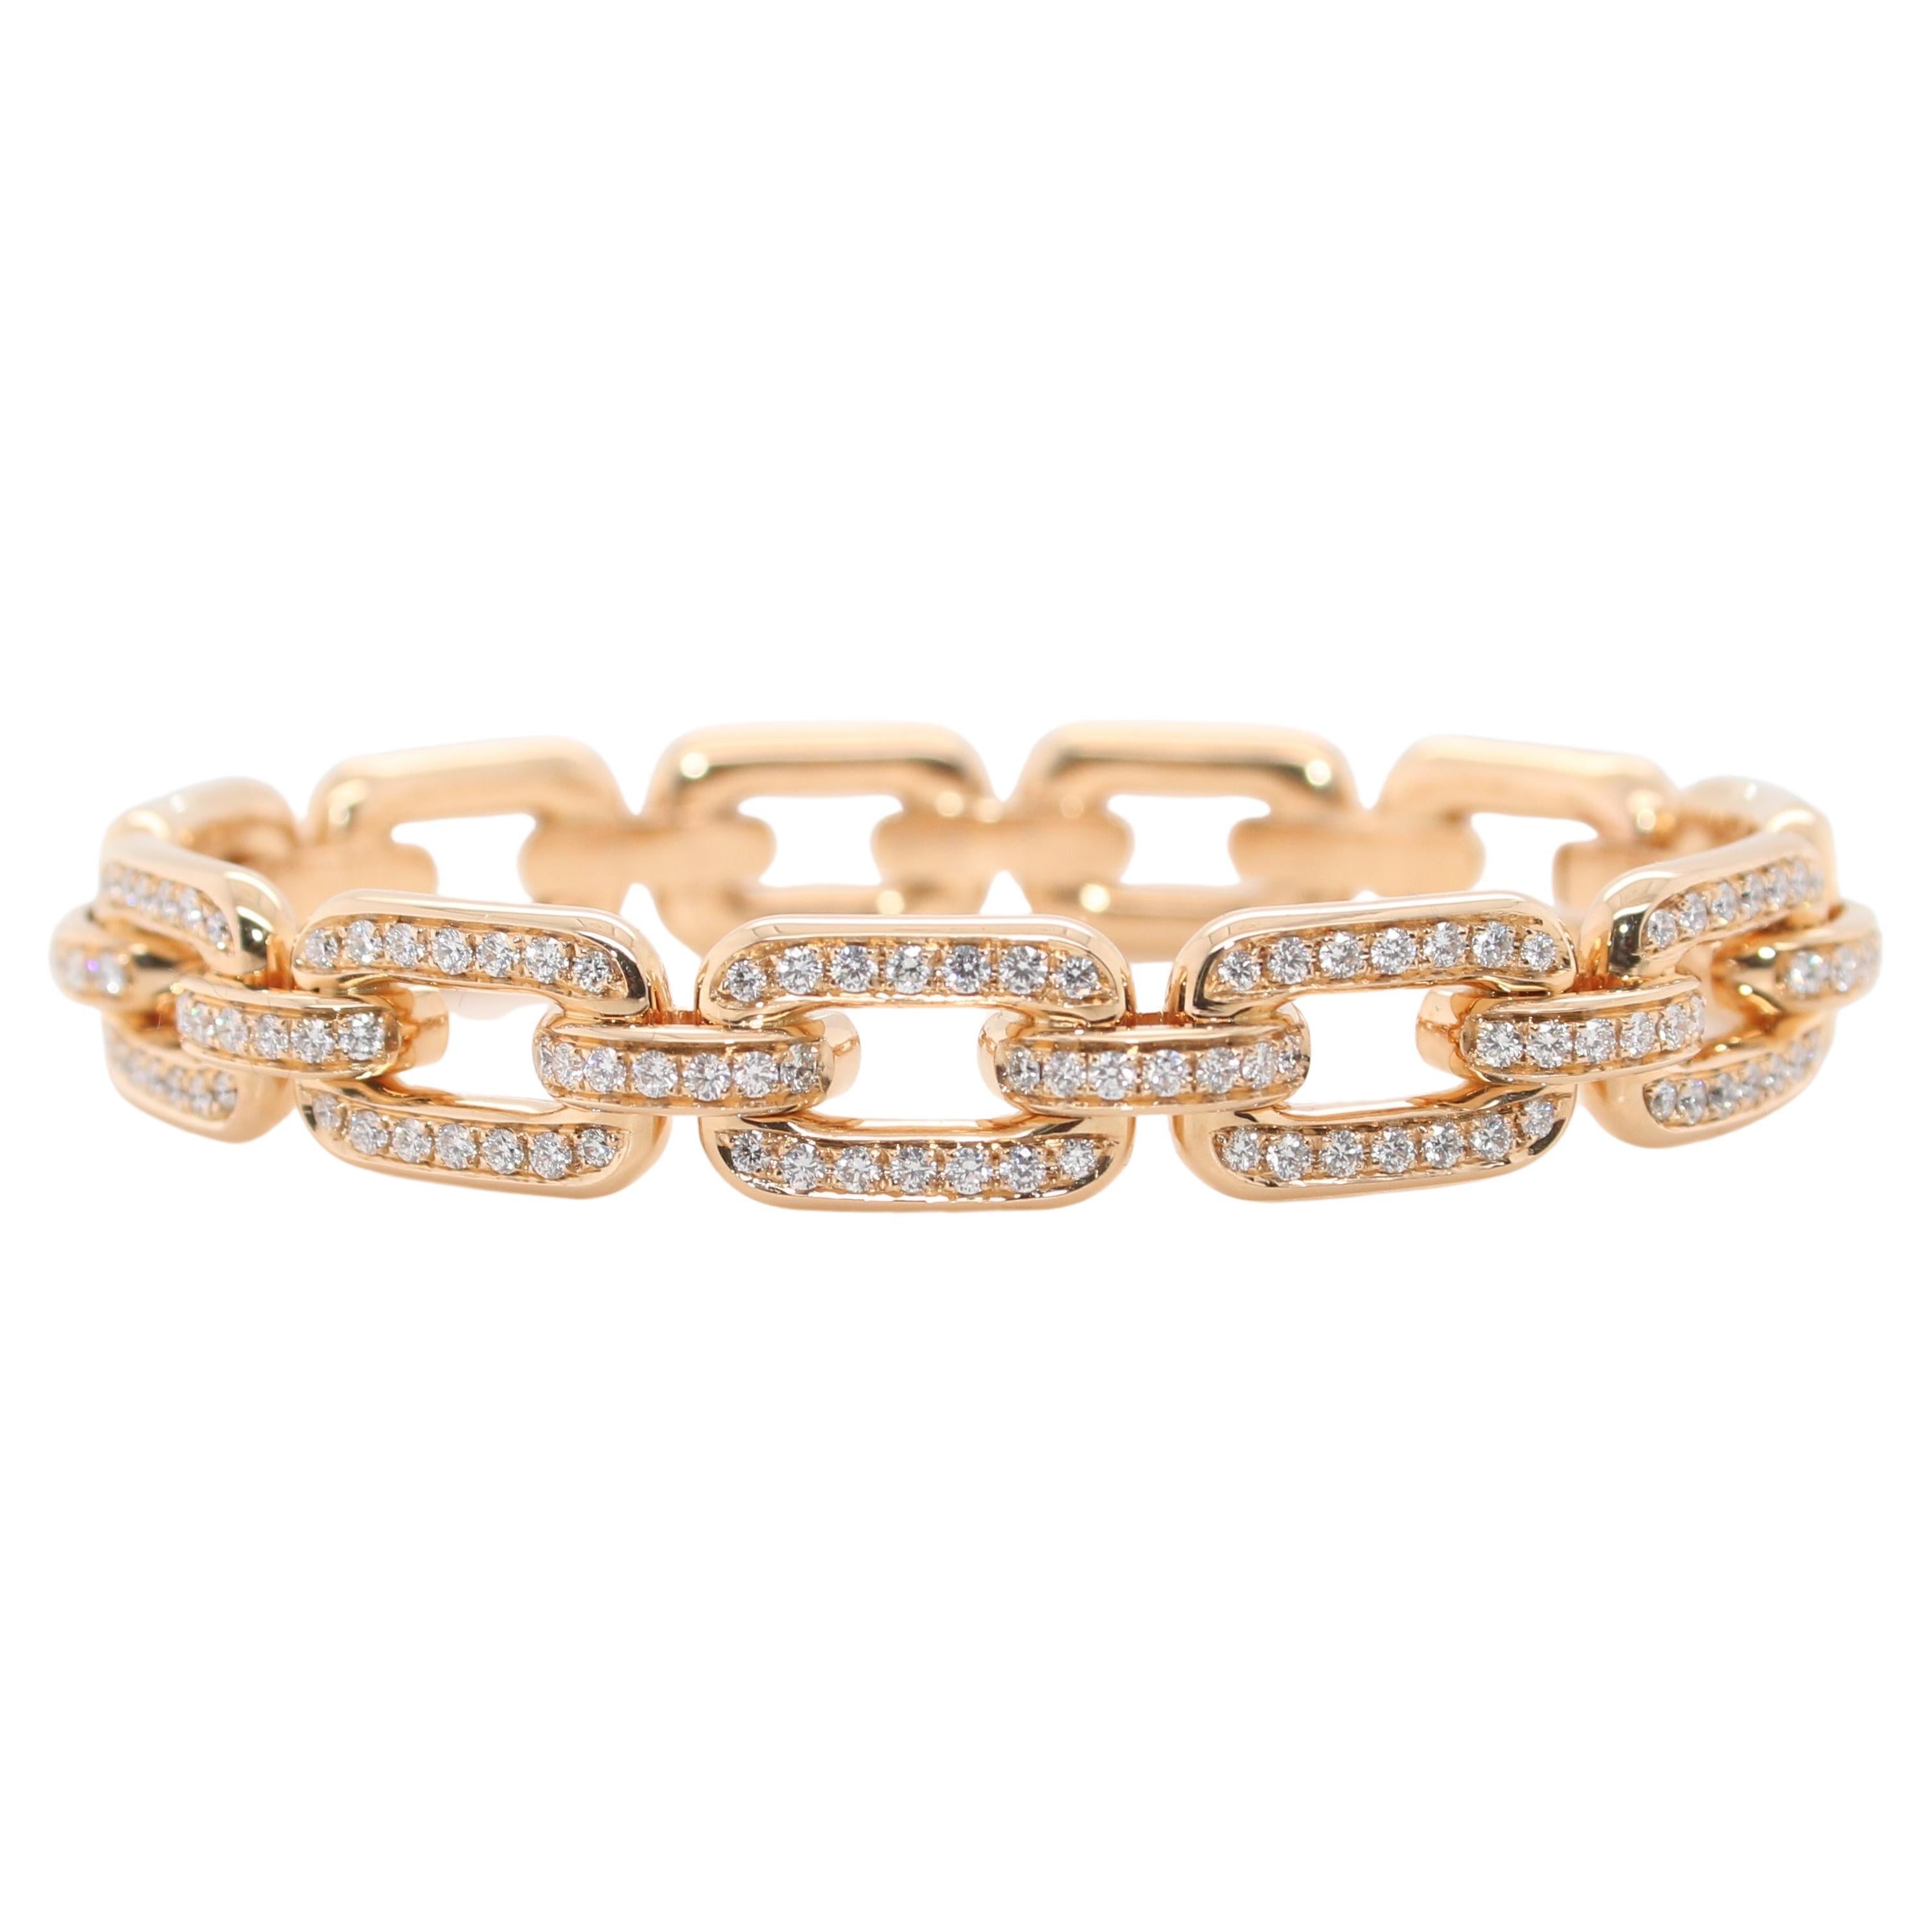 Chunky Chain Sammlung von Ralph Lauren Pavé Diamant 18K Gold Kette Armband